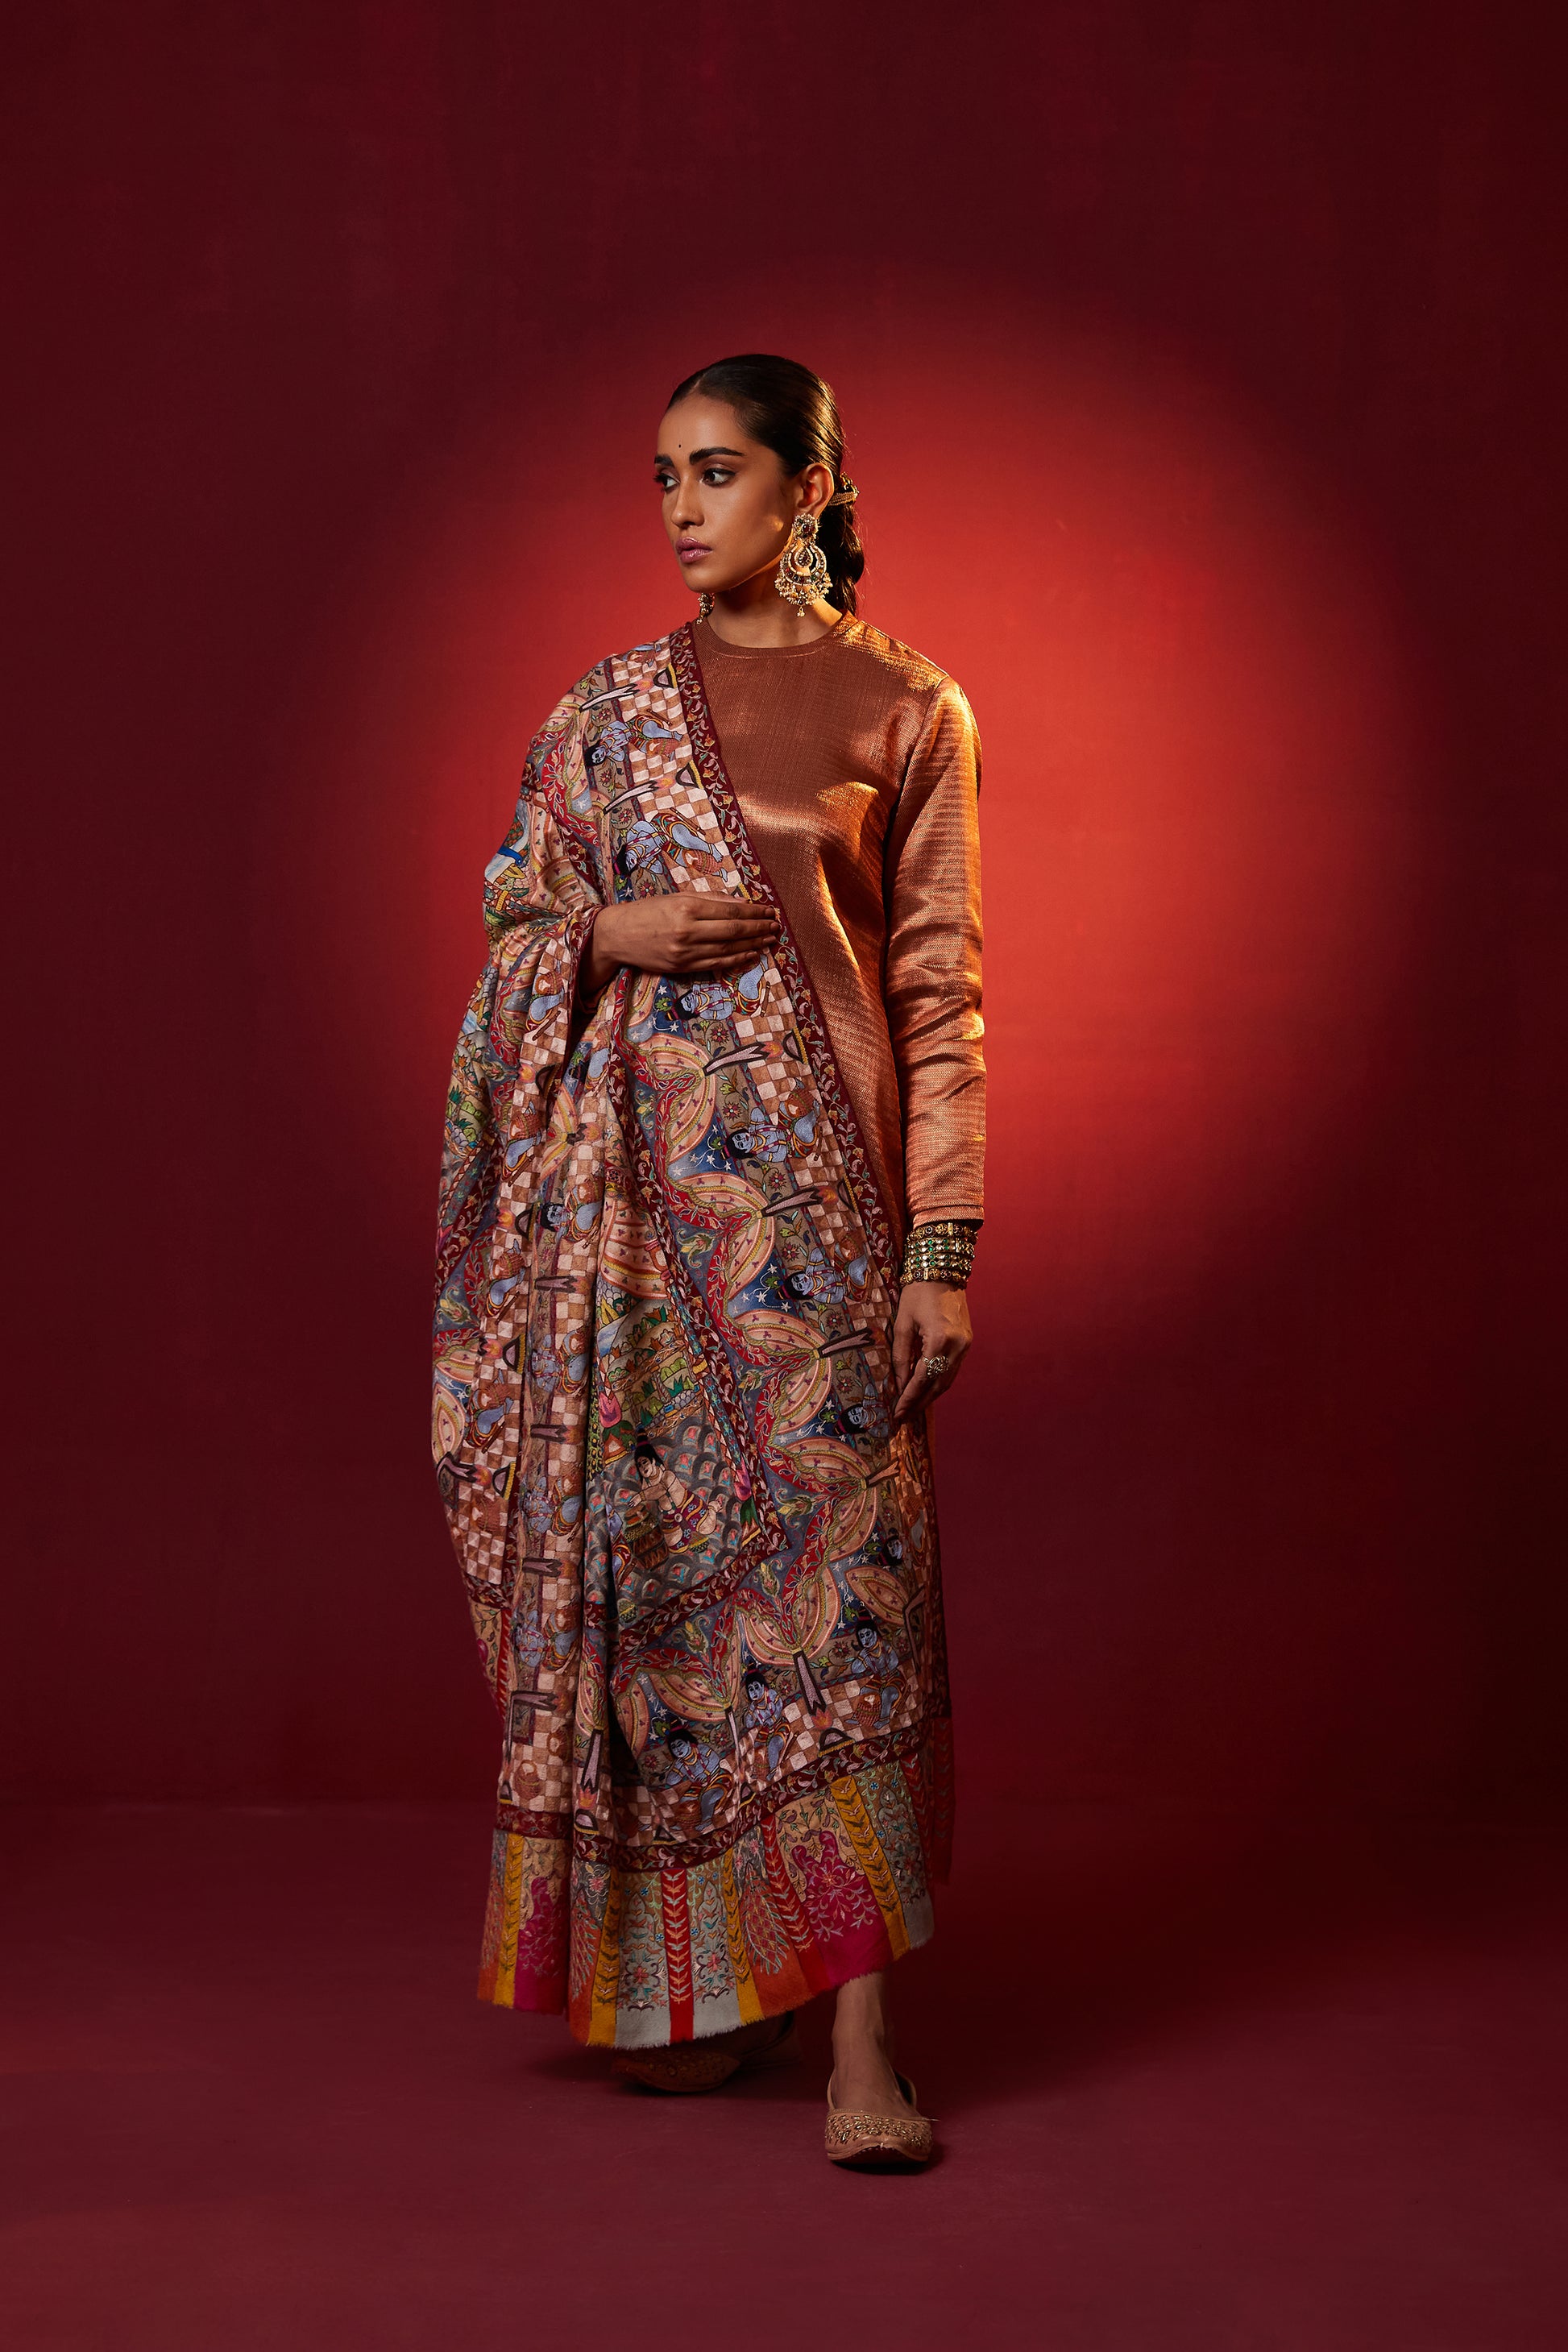 Model is seen wearing the Bal Krishna Pashmina Shawl by Shaza.